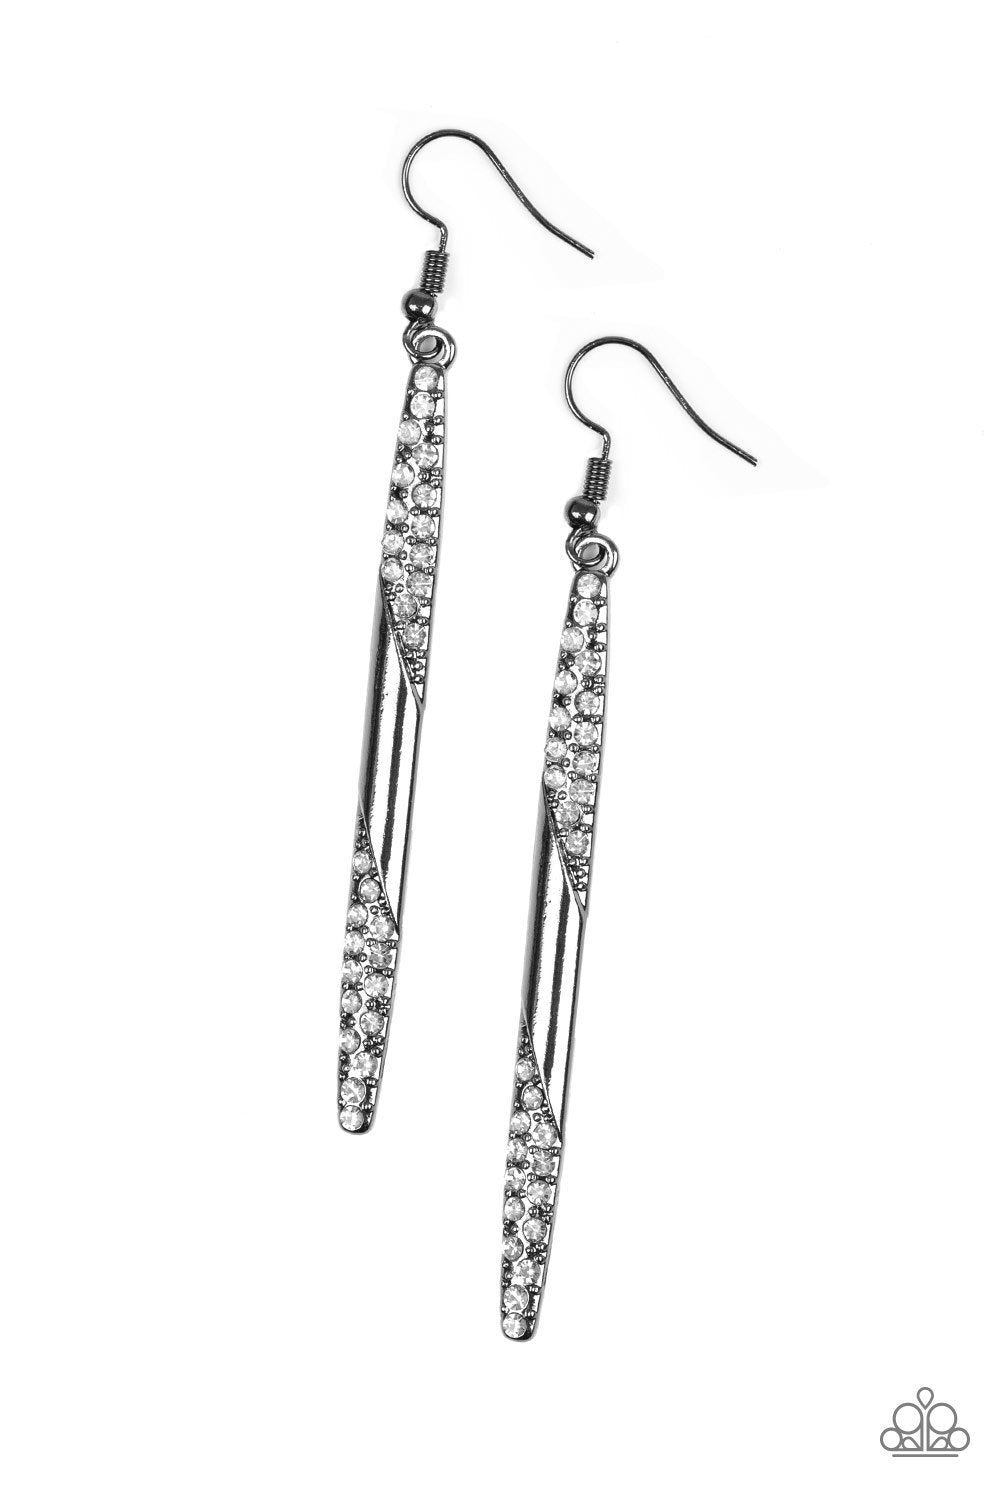 Award Show Attitude Gunmetal Black Earrings - Paparazzi Accessories-CarasShop.com - $5 Jewelry by Cara Jewels